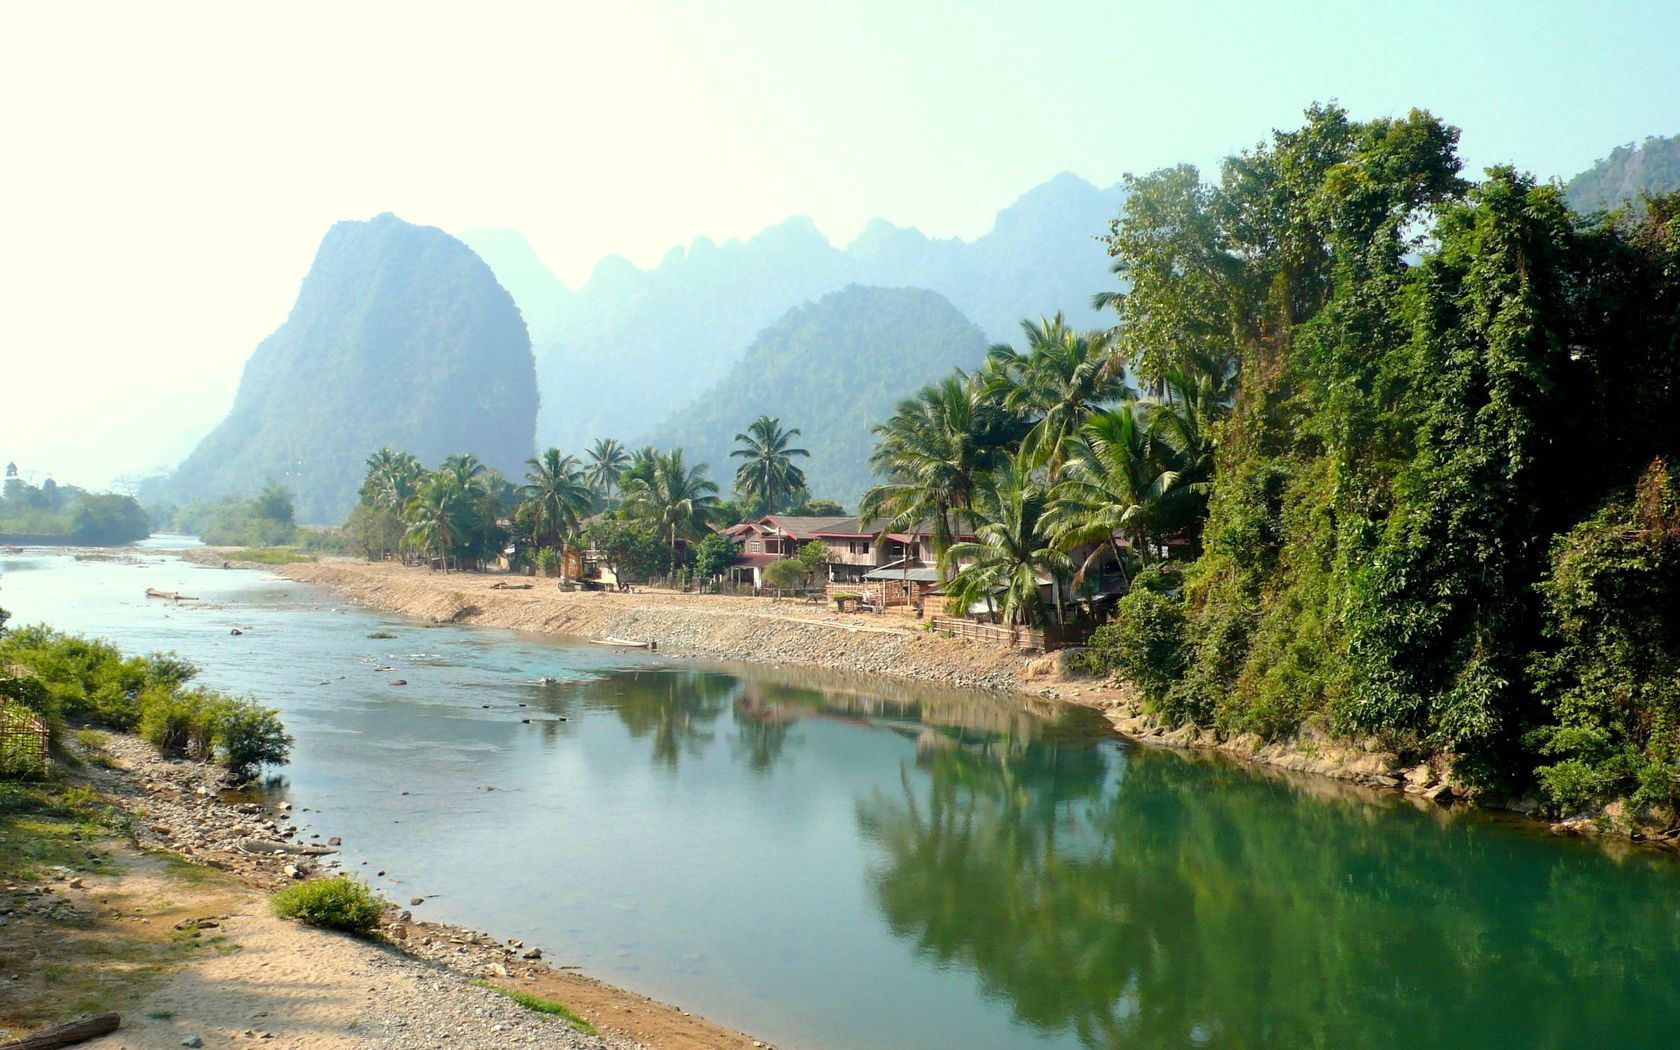 tropics, rivers, nature, palms, huts, laos